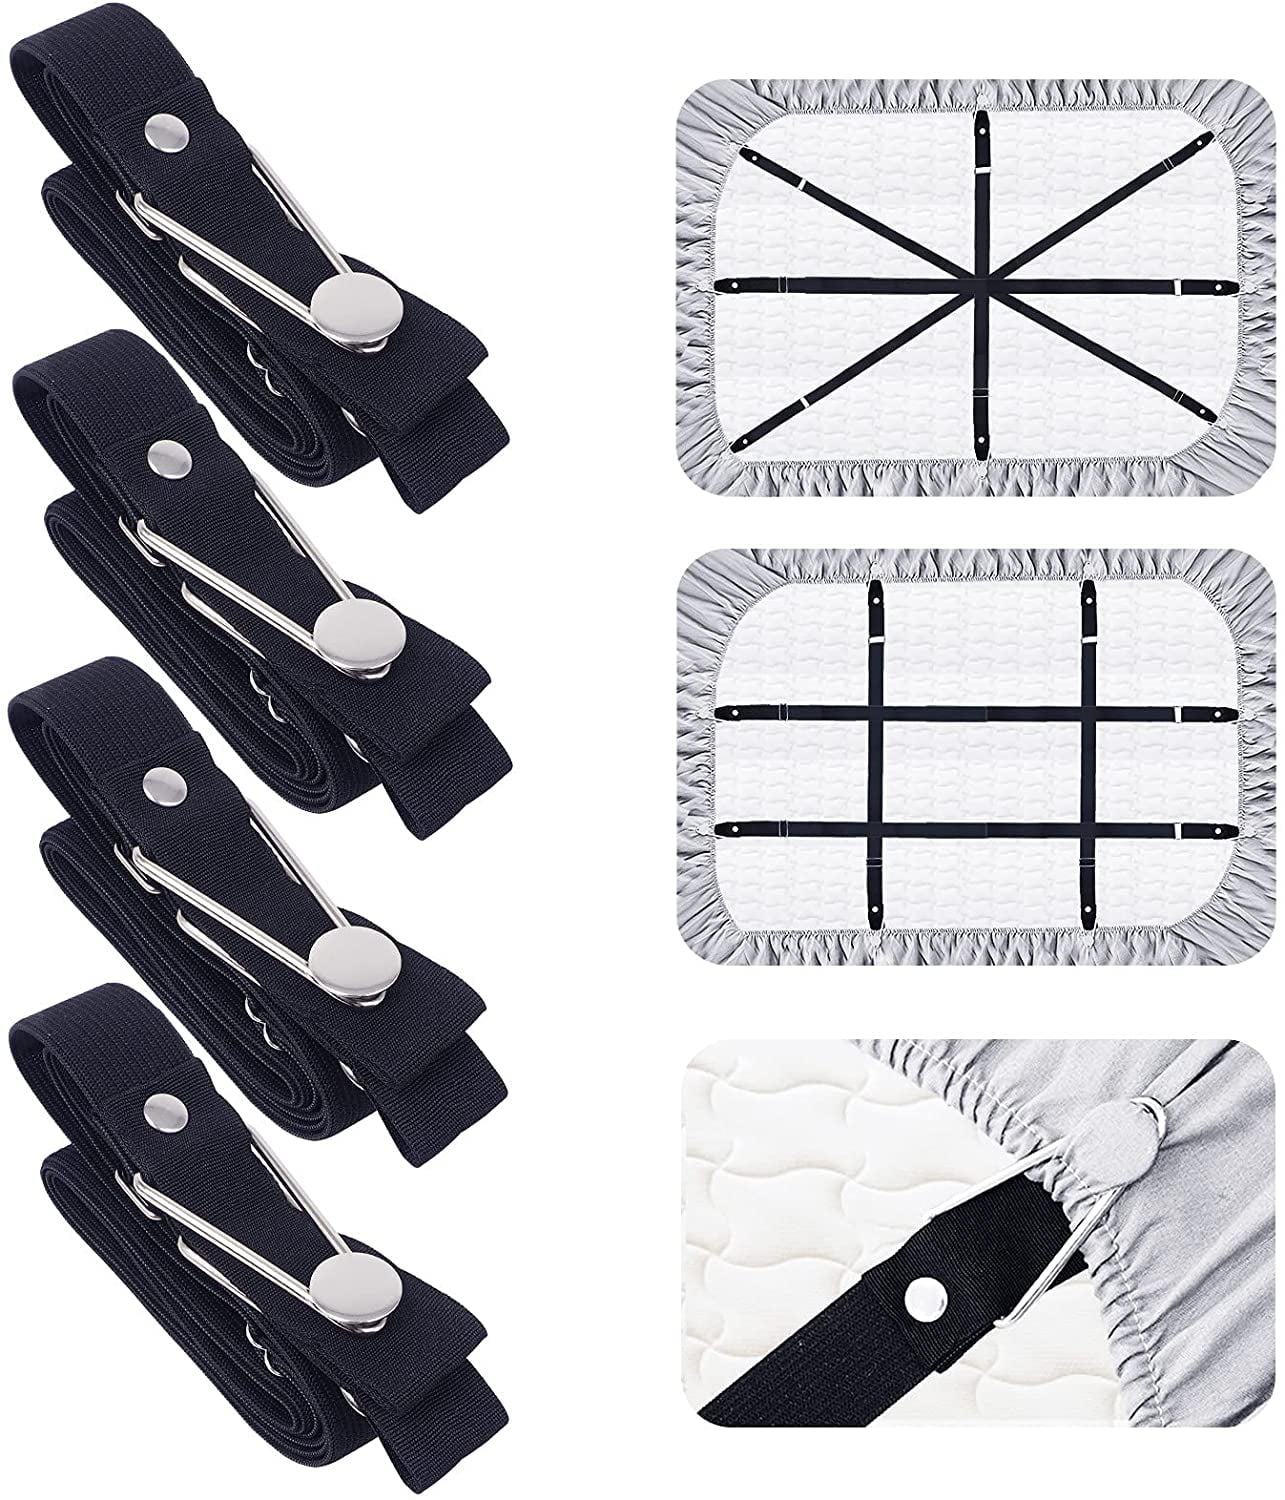 Fitted Bed Sheet Holder Grip Mattress Gripper Clip Fastener Elastic Strap HO3 